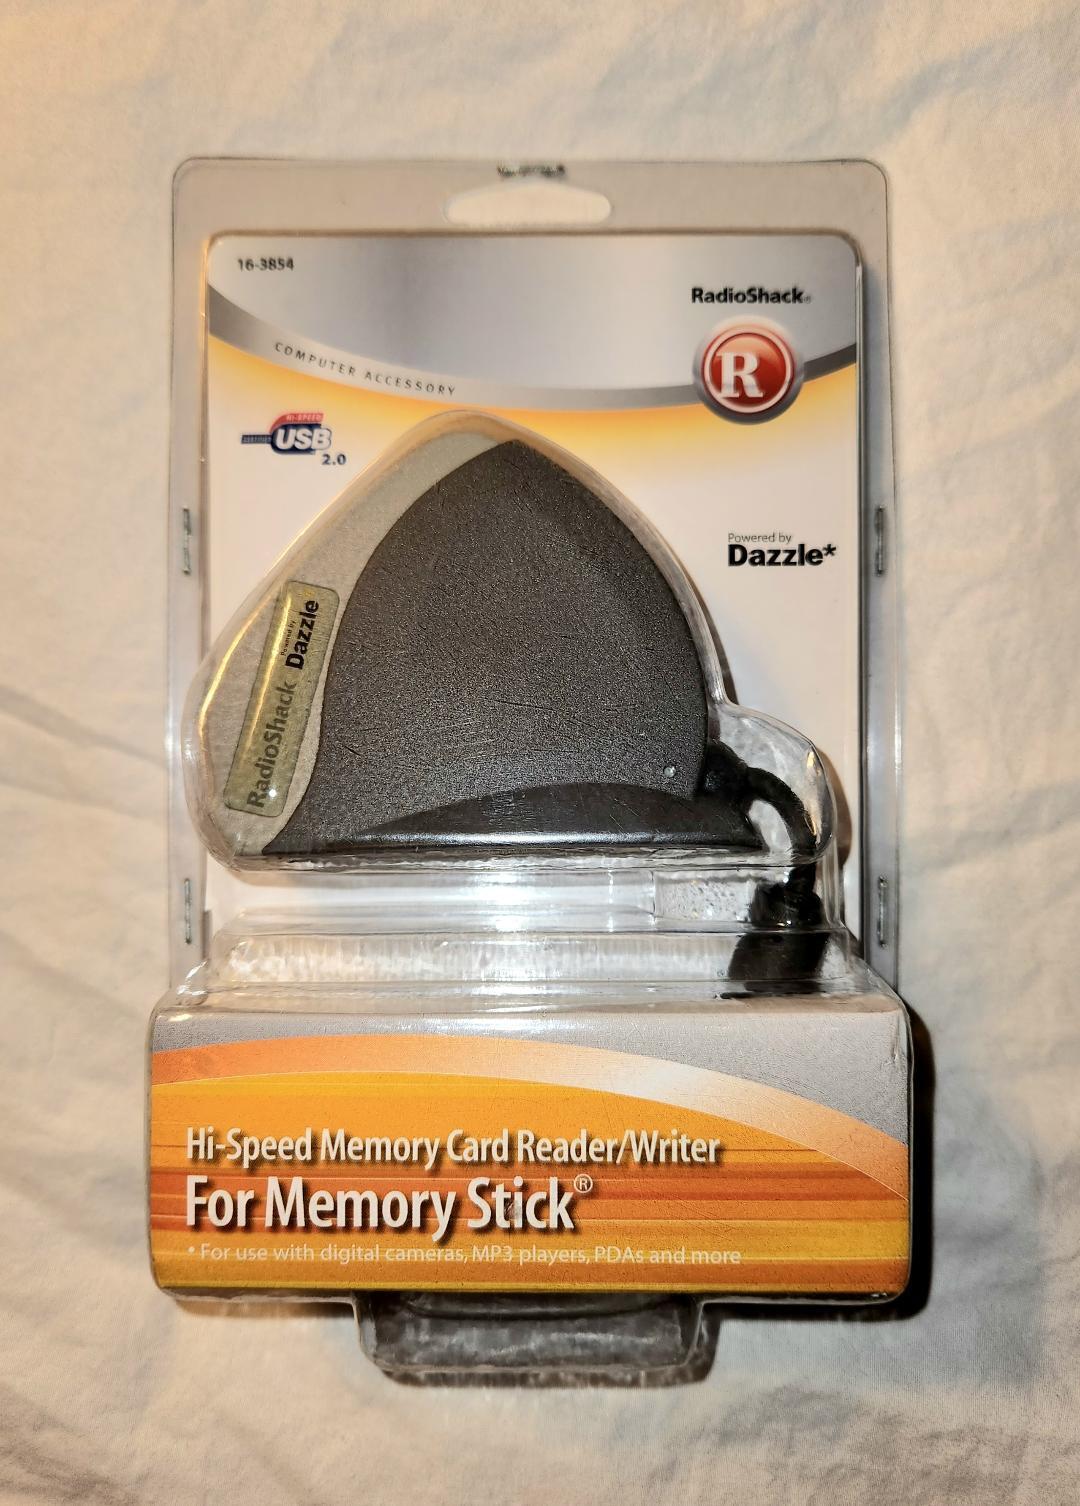 Radio Shack Dazzle Hi-Speed Memory Card Reader/Writer For Memory Stick 16-3854